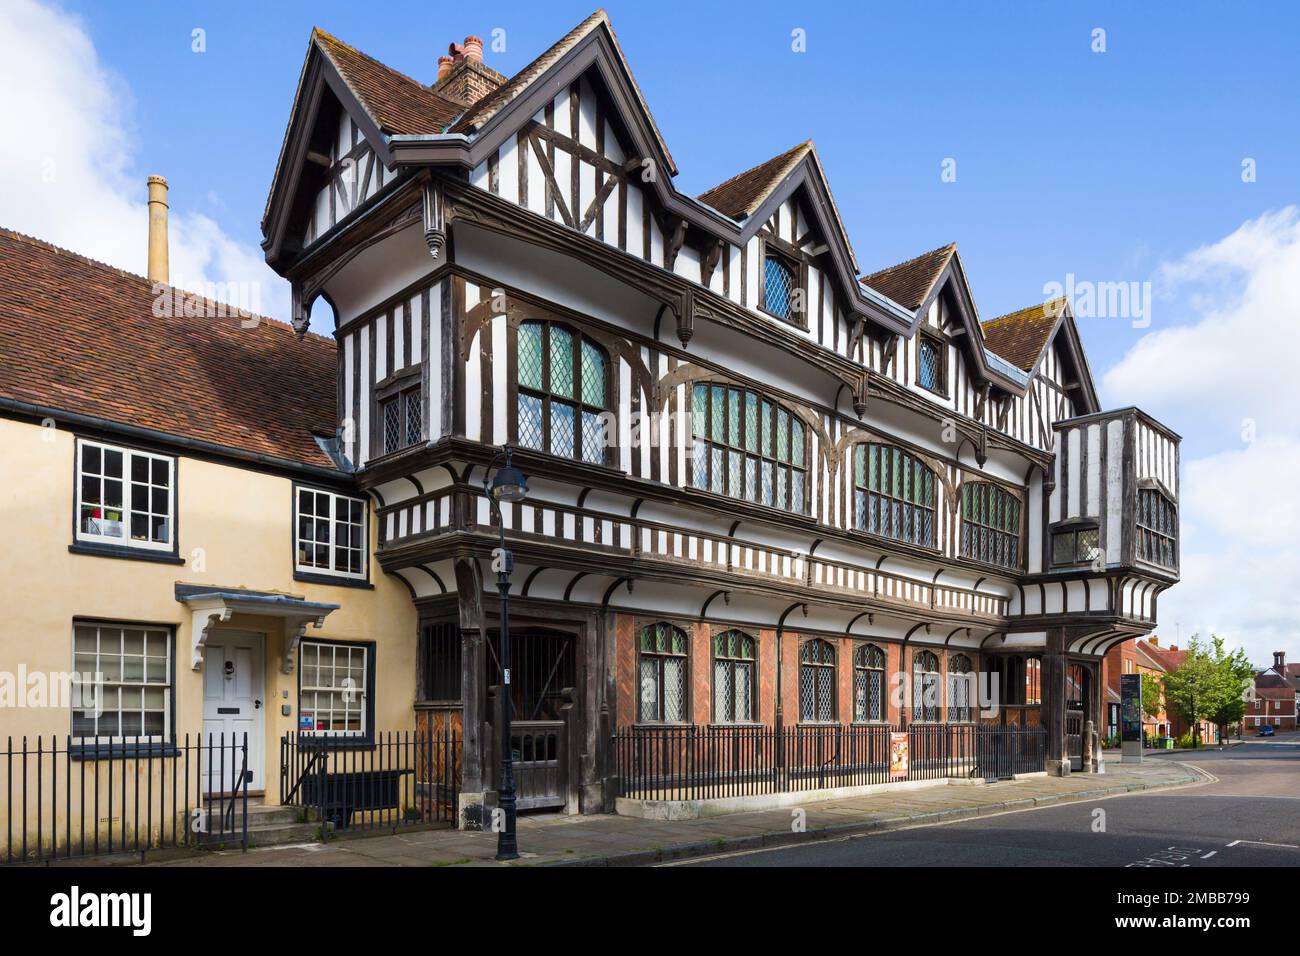 Das Tudor House and Garden Museum, Southampton, ein eindrucksvolles Stadthaus mit Holzrahmen von ca.1500. Stockfoto